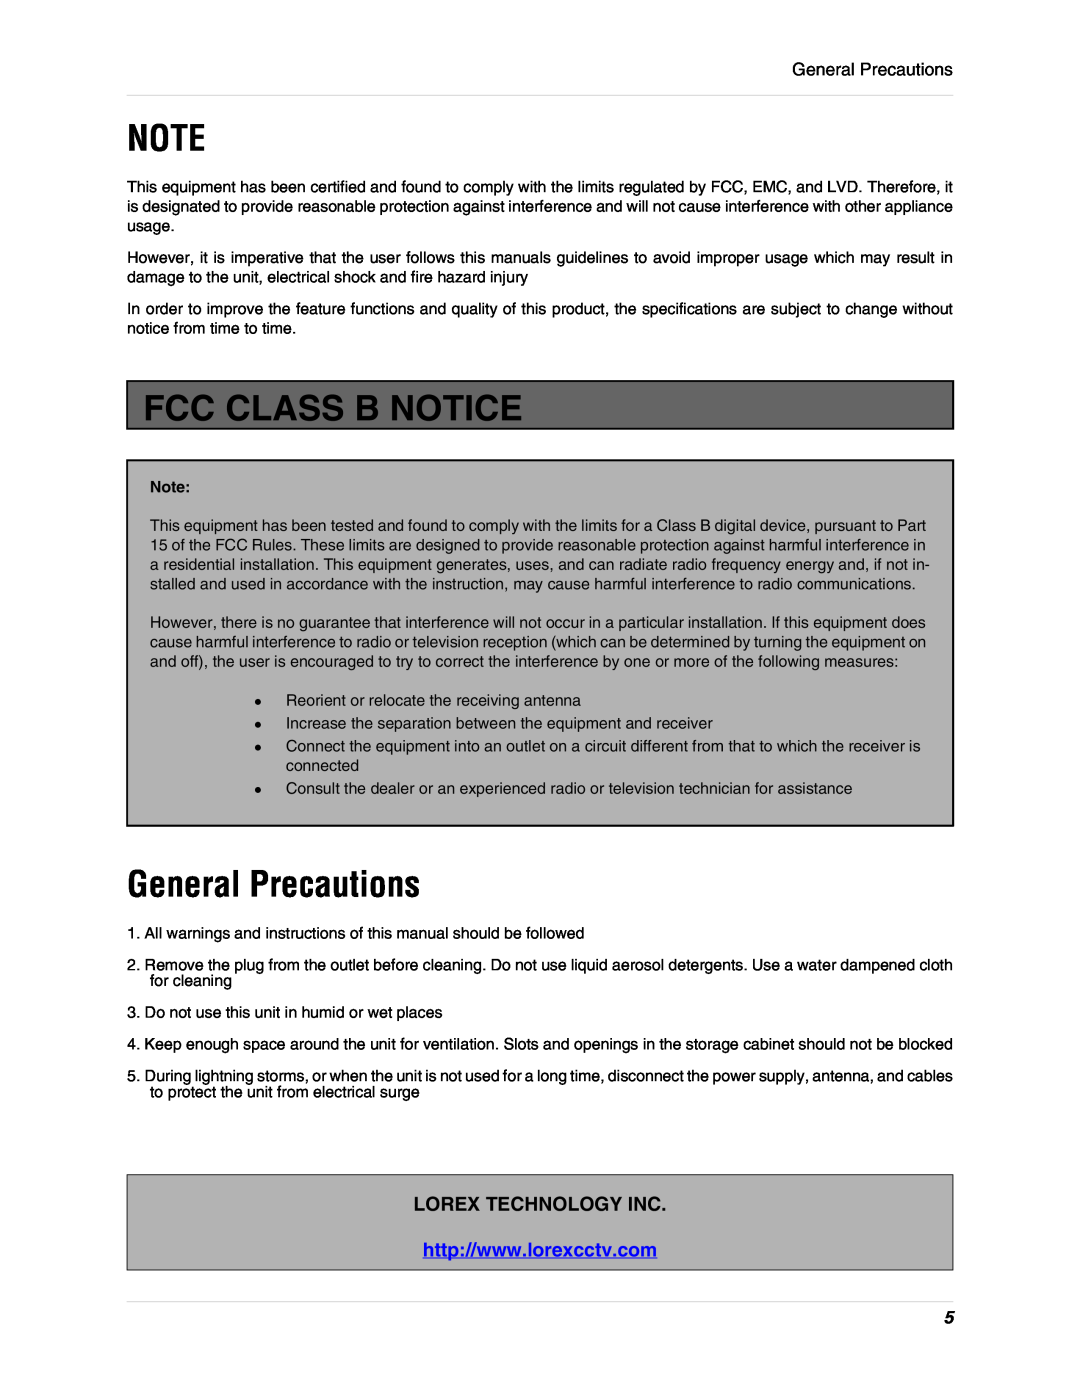 LOREX Technology SHS-4WLS instruction manual Fcc Class B Notice, General Precautions, Lorex Technology Inc 